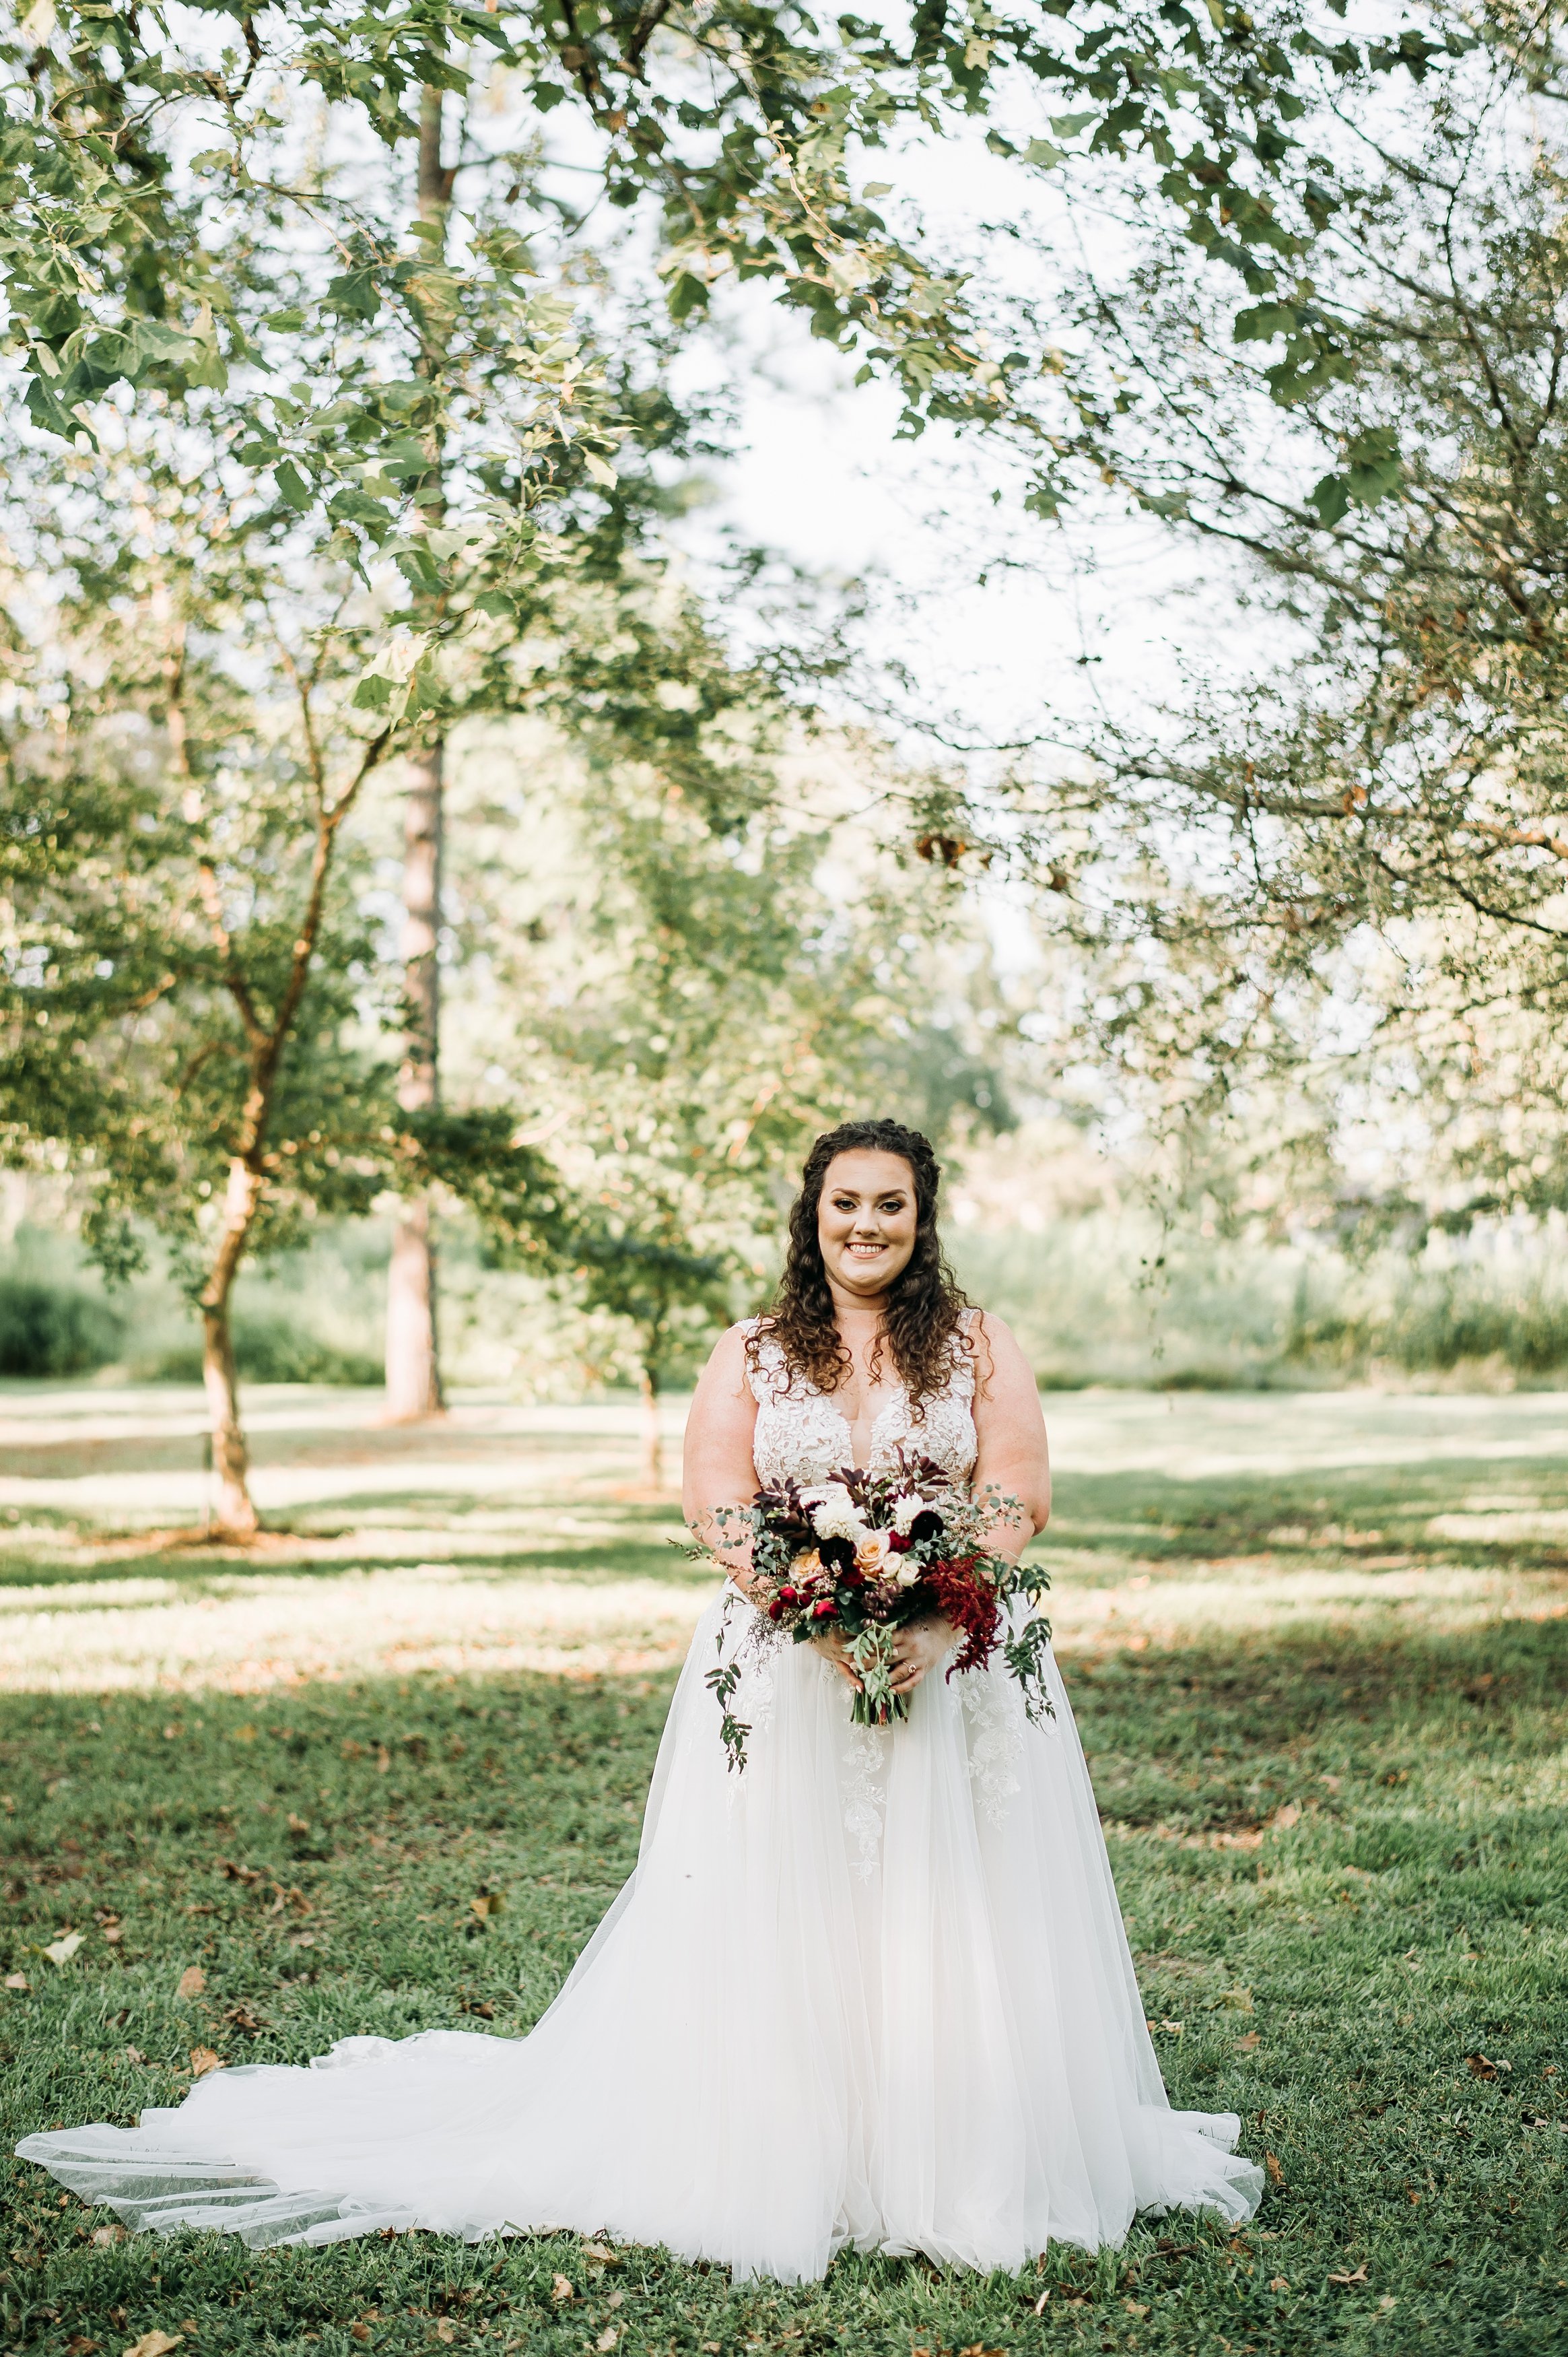 Bridal Portrait Session at LSU Hilltop Arboretum in Baton Rouge, Louisiana. Photographed by Taylor Hubbs, a Baton Rouge wedding and portrait photographer. 